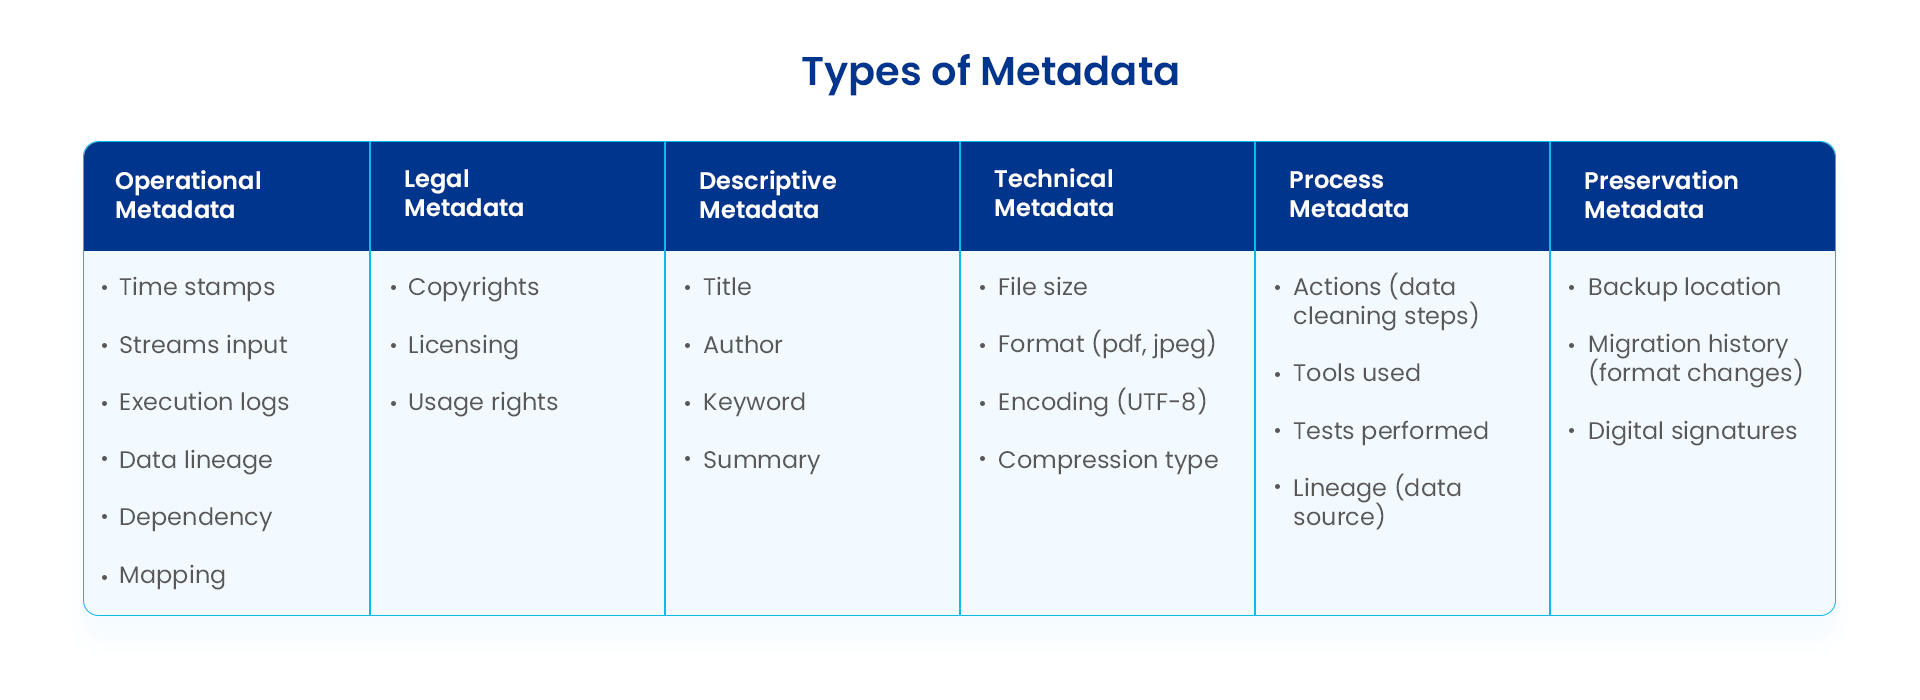 Types of metadata. Image by Astera.